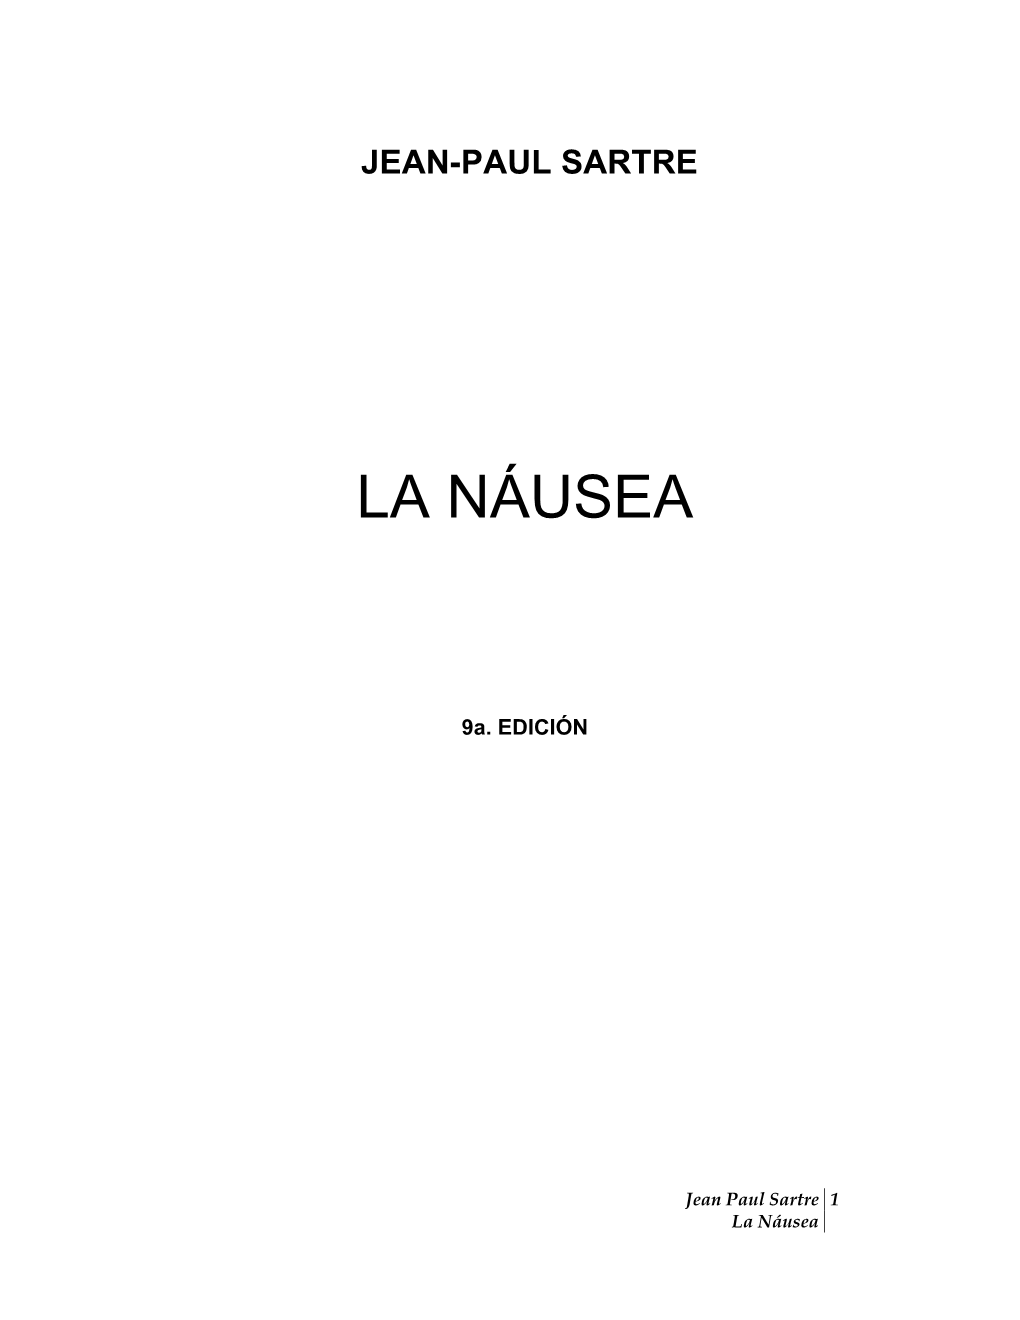 La Náusea. (Jean-Paul Sartre.)